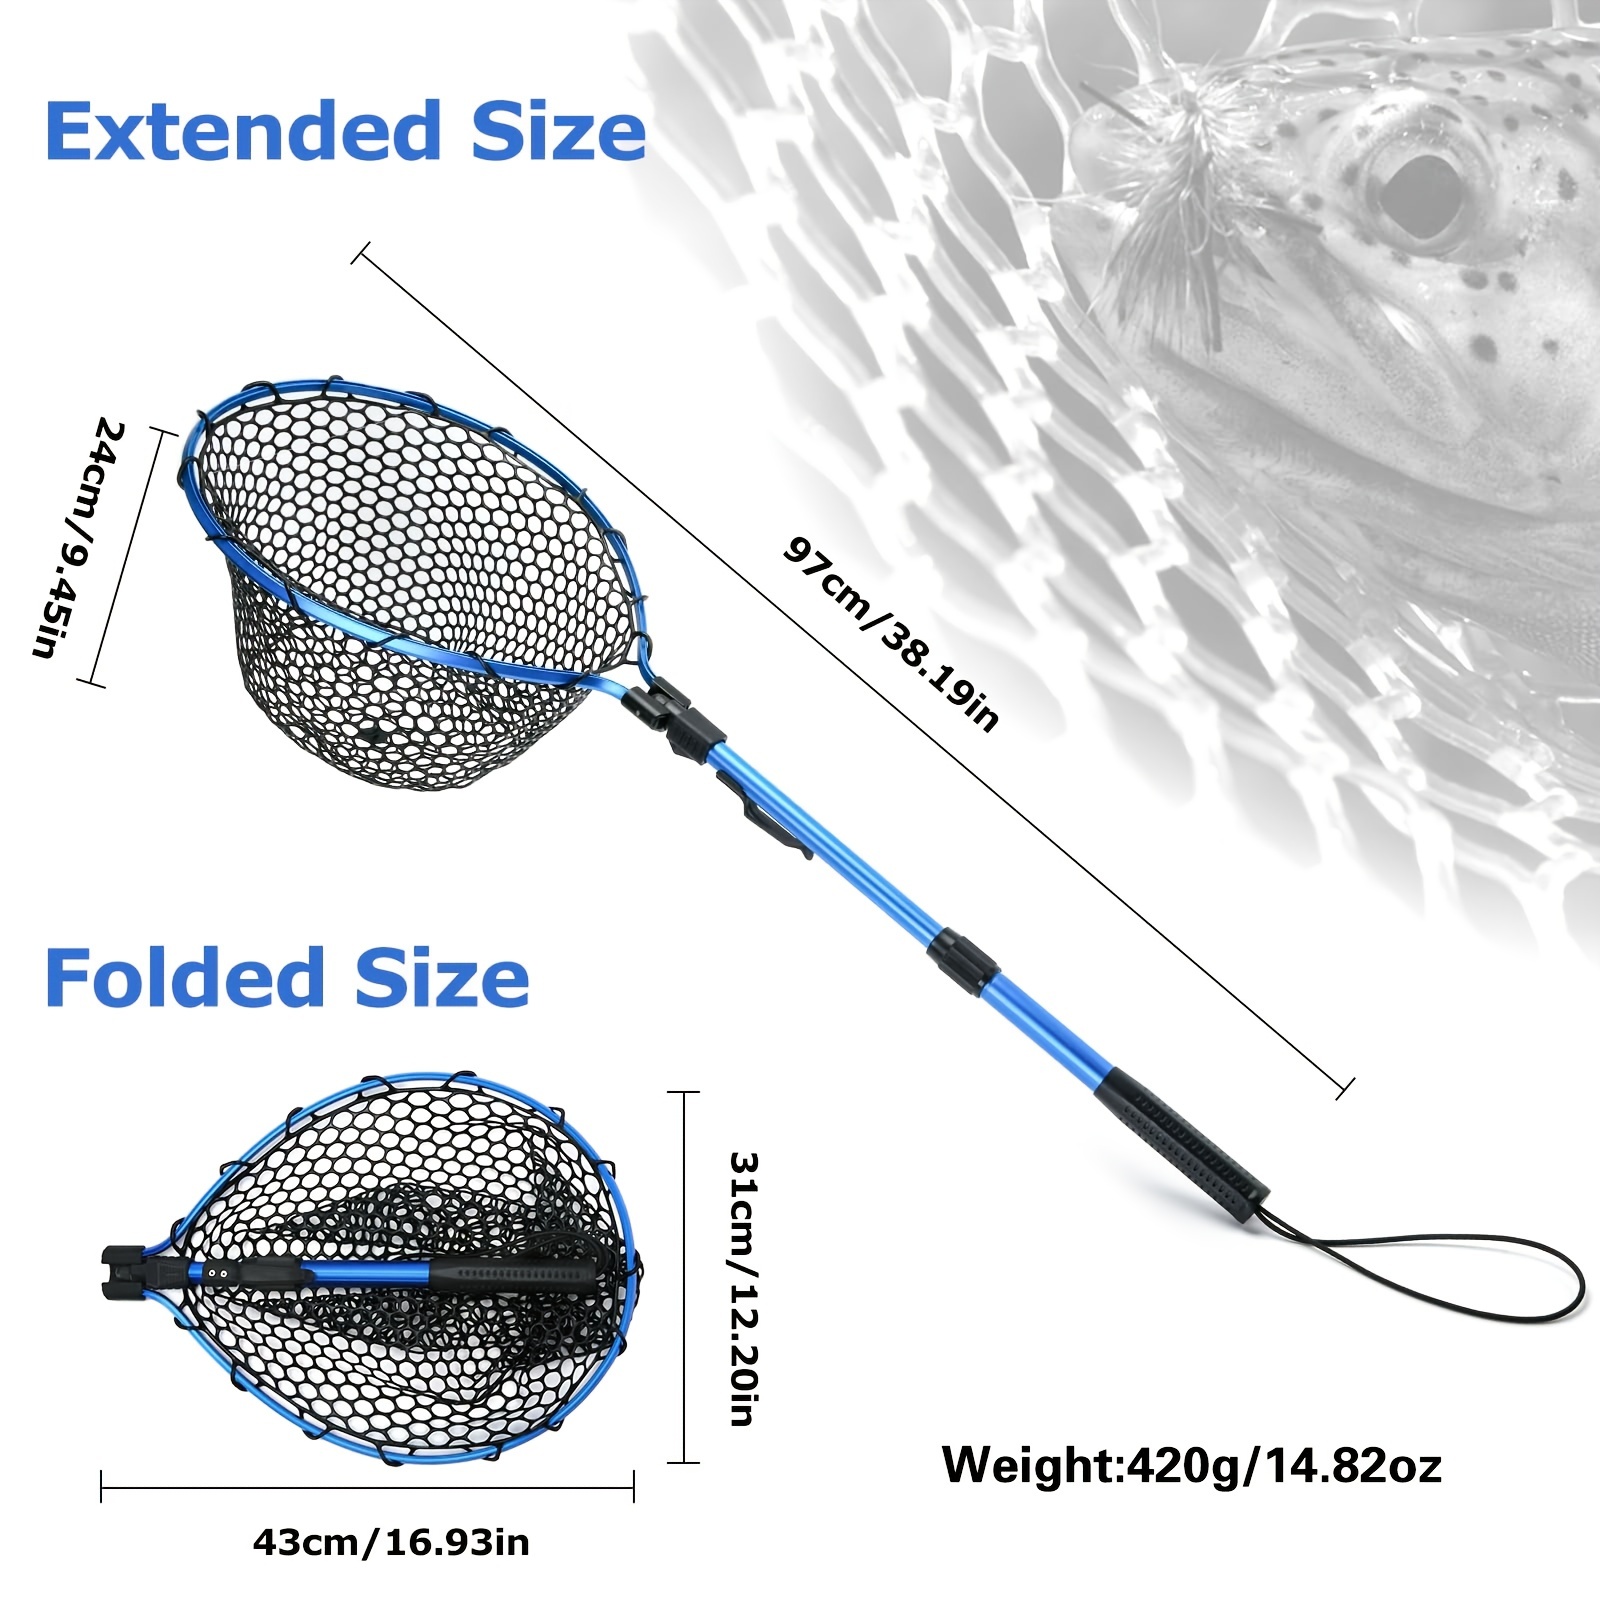 * 1pc Fishing Net, Collapsible Telescopic Pole Blue Rubber Net, Folding  Extend Landing Net For Saltwater Freshwater Fishing